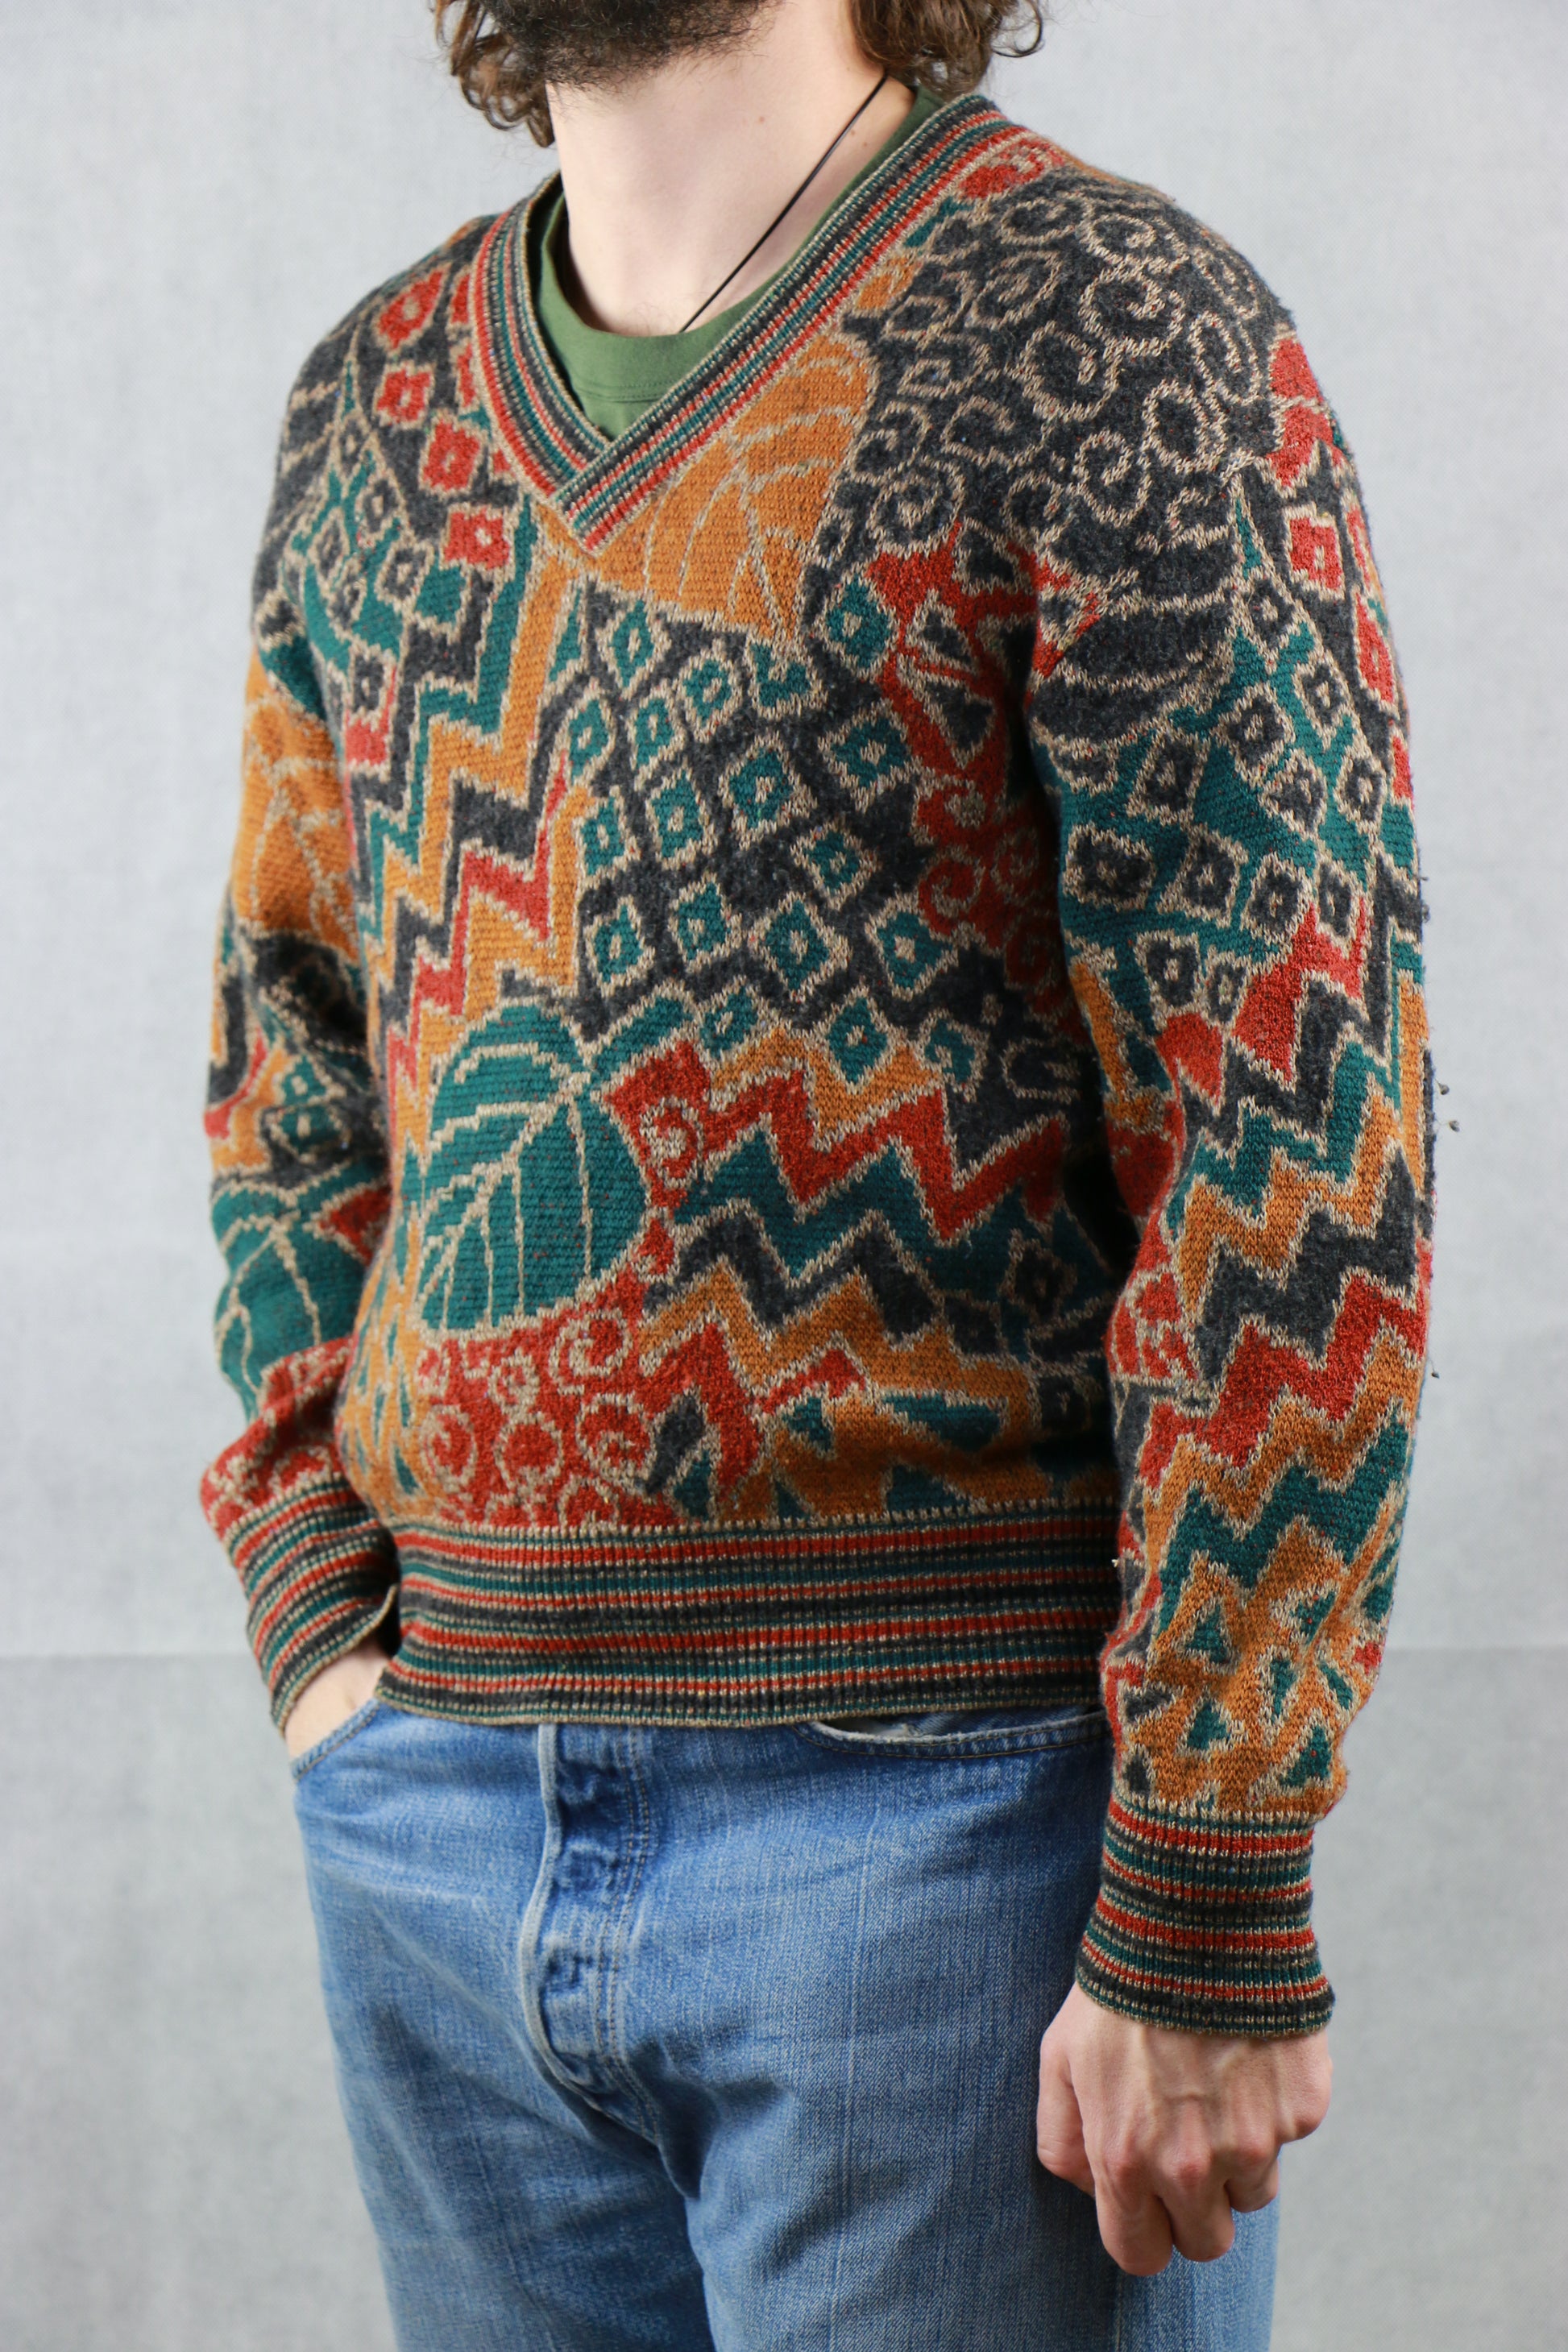 Missoni Sport Sweater, vintage store clochard92.com